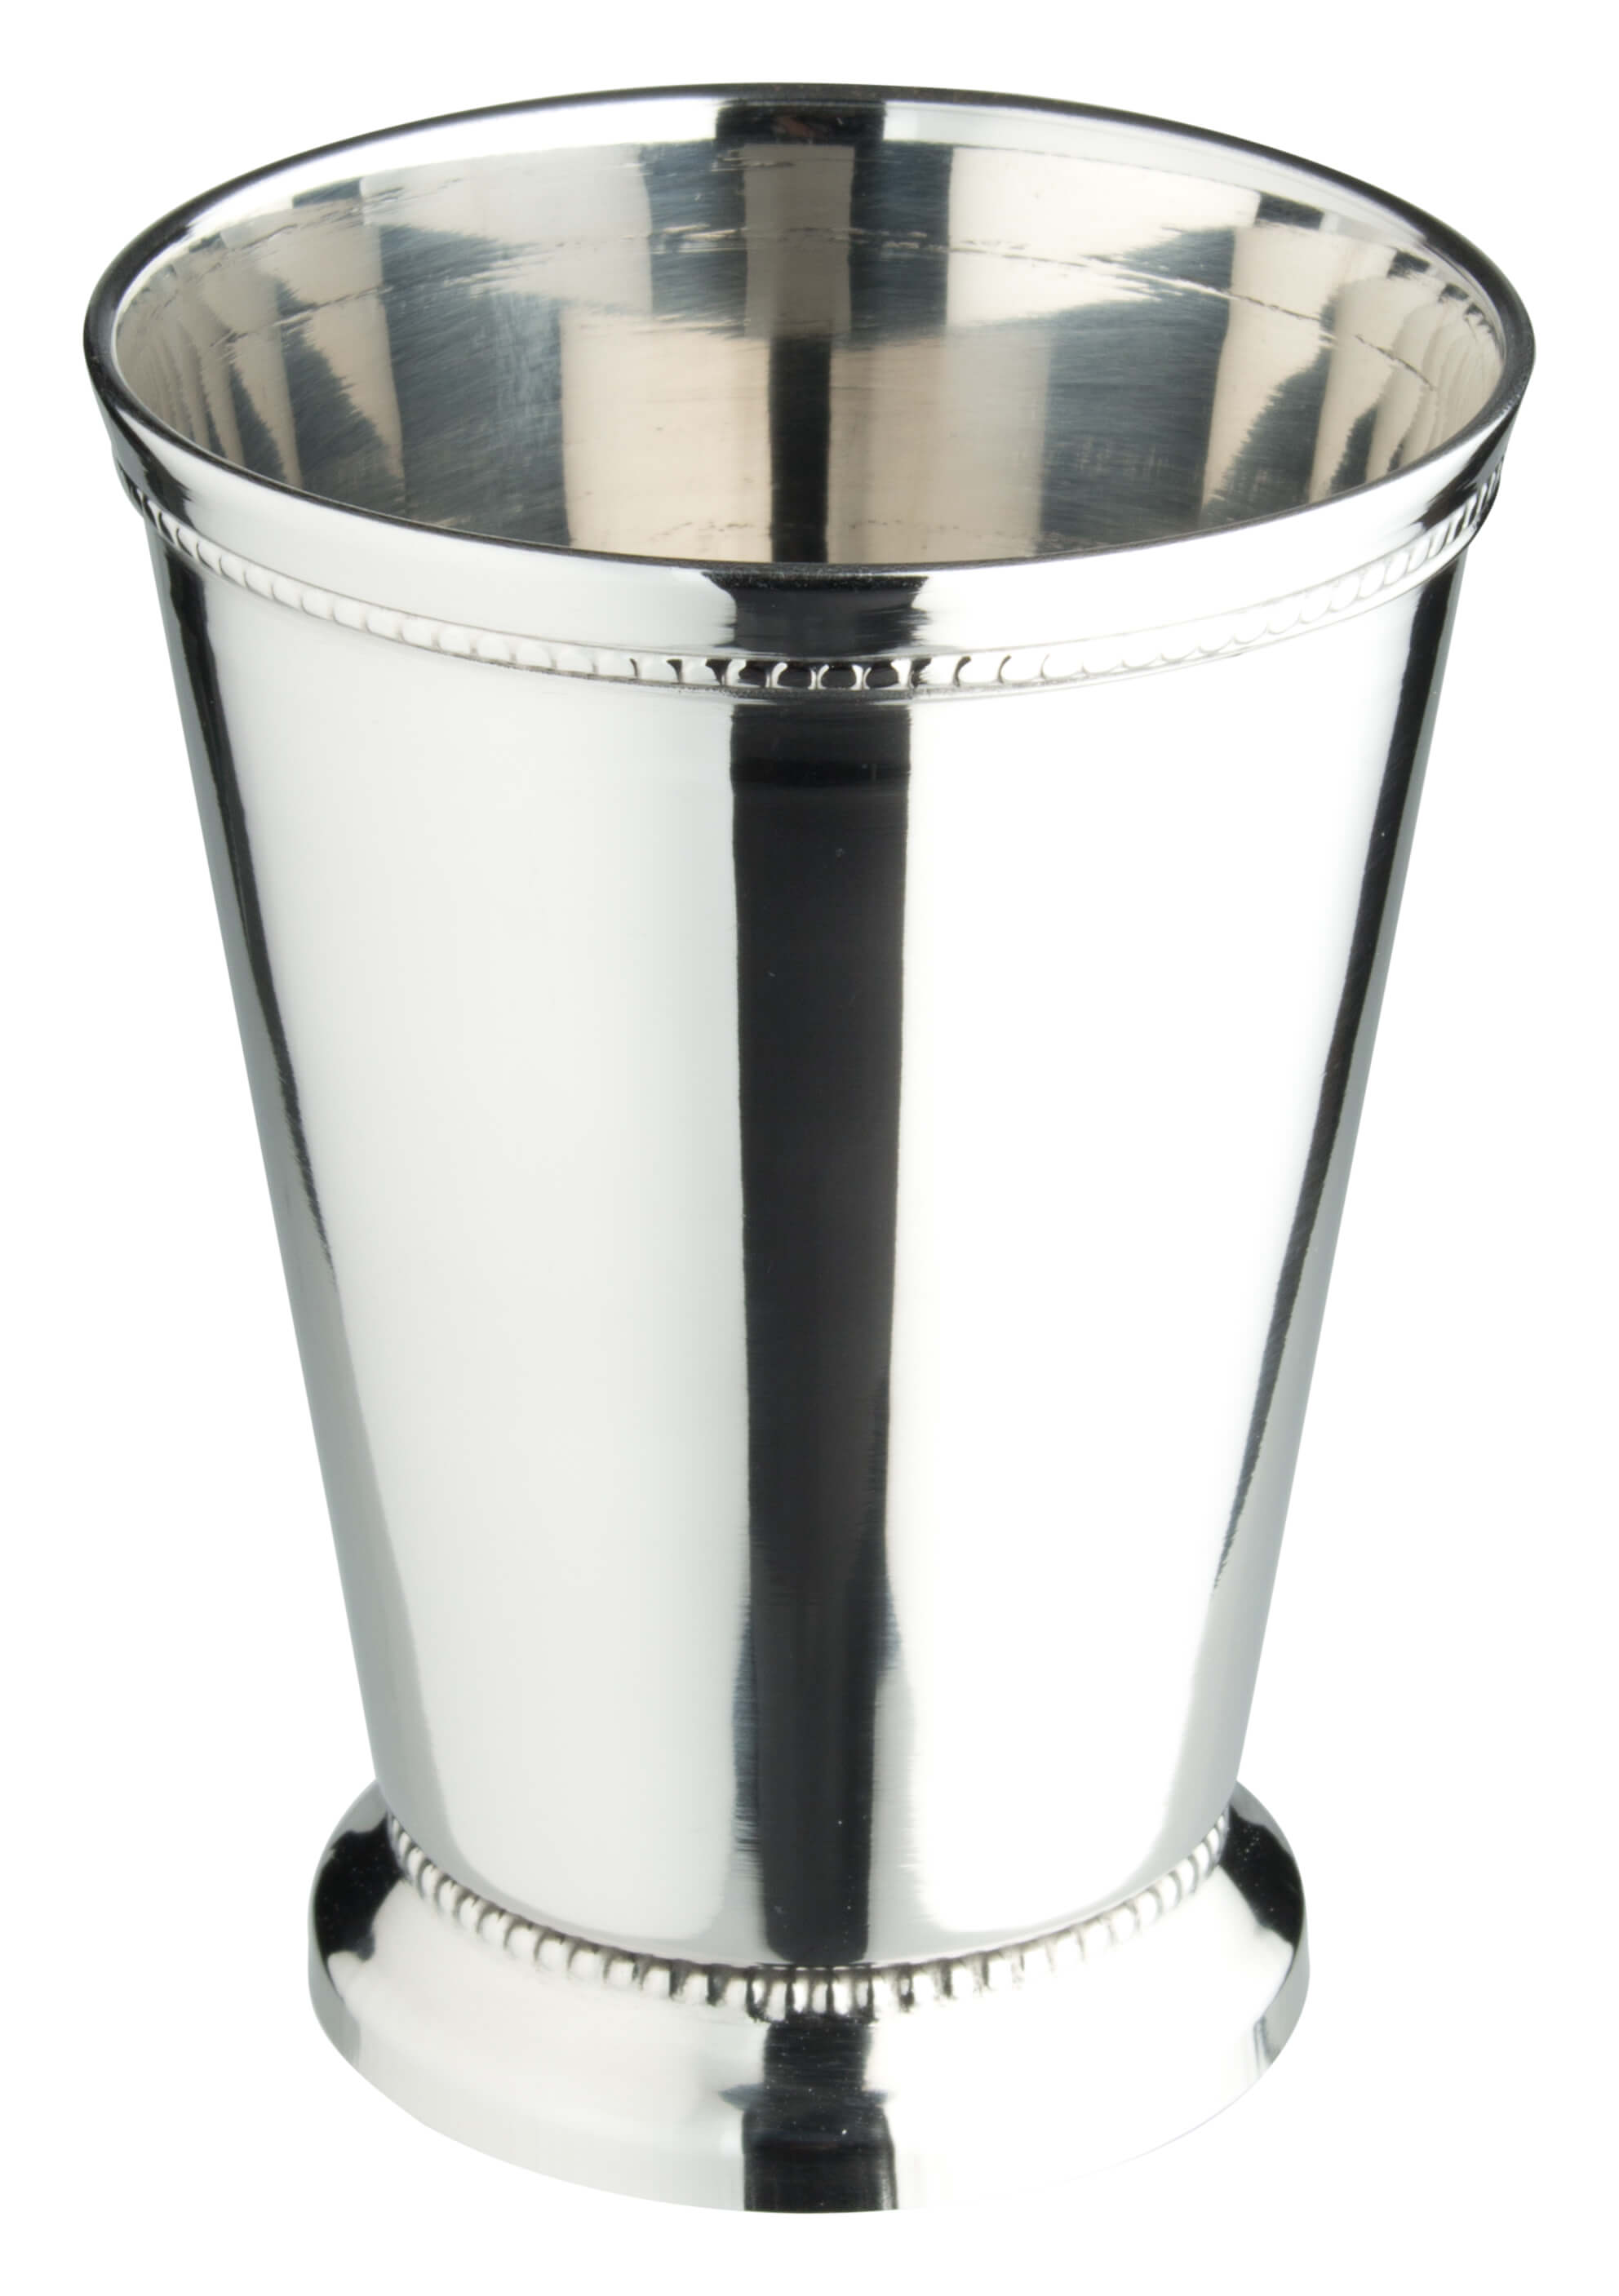 Julep mug, stainless steel, irregular stock - 320ml